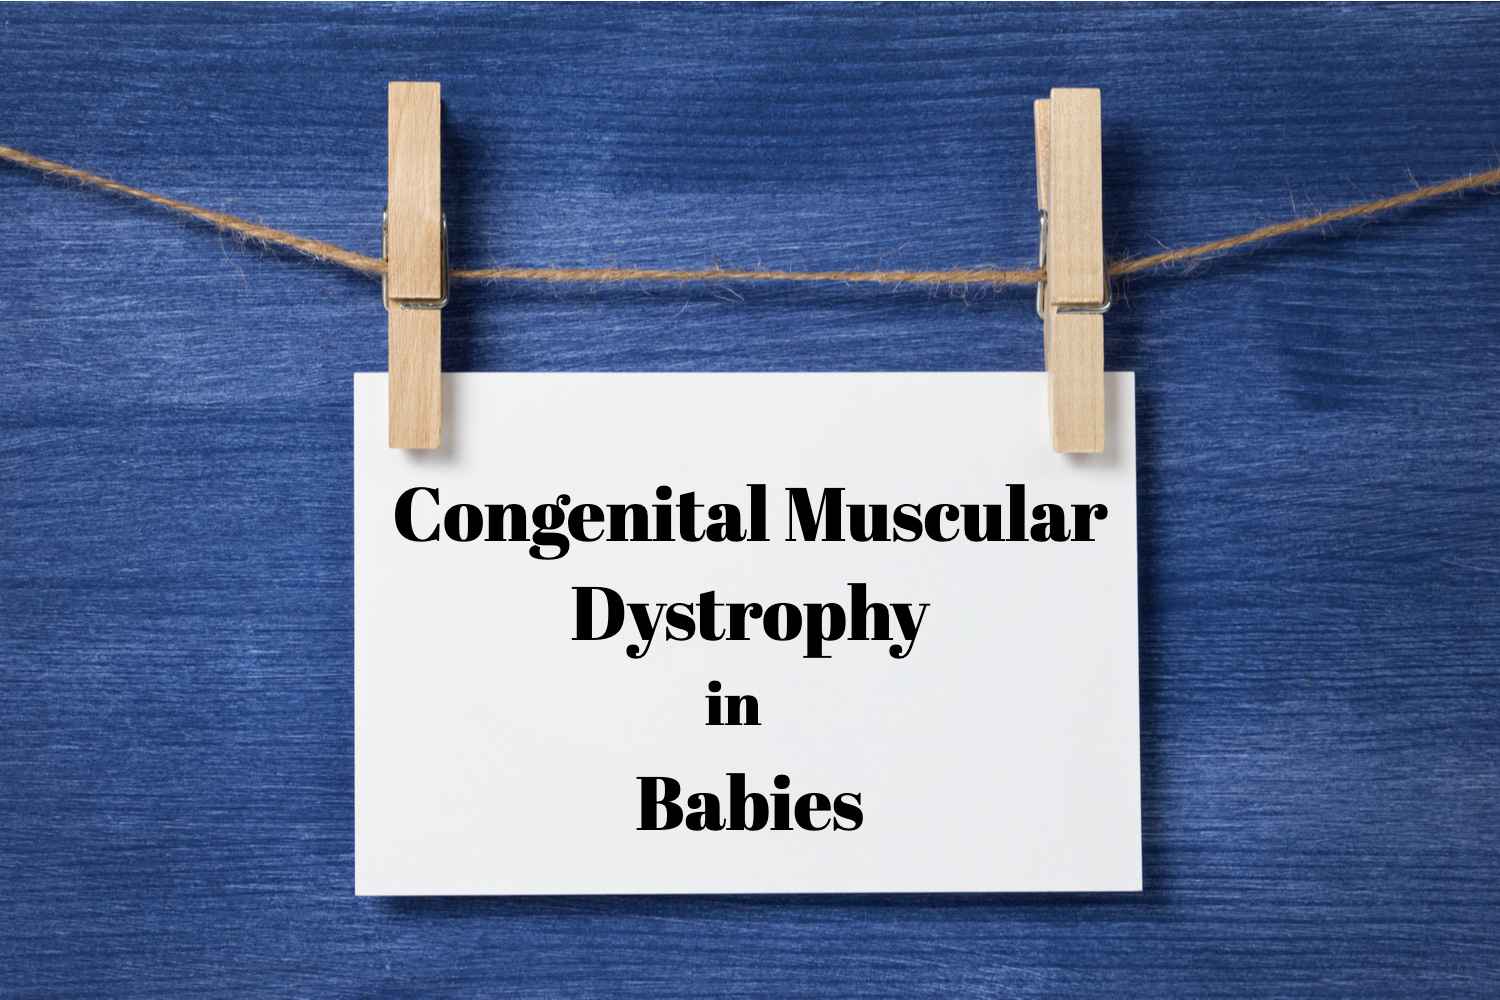 Congenital Muscular Dystrophy in Babies